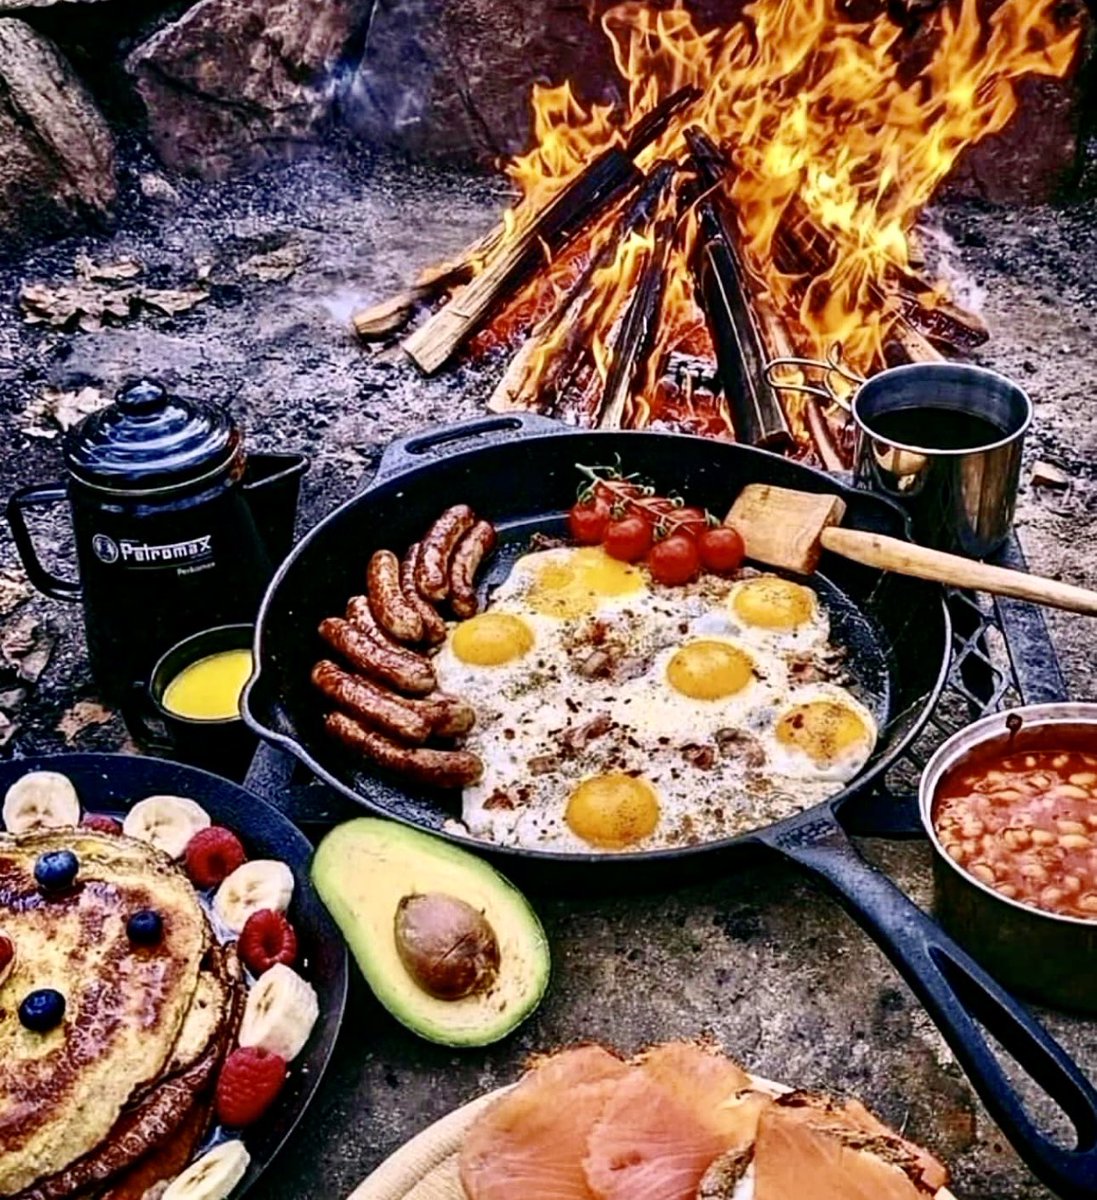 ☕️ Good Morning from the Campfire 🔥 🍳

PISMO COAST RV RENTALS
pismocoastrvrentals.com 
☎️ 805-574-3050

#goodmorning #saturday #weekend #breakfast #coffee #outside #outdoors #camping #rv #rvlife #rvrental #rvresort #glamping #centralcoast #PismoCoastRvRentals